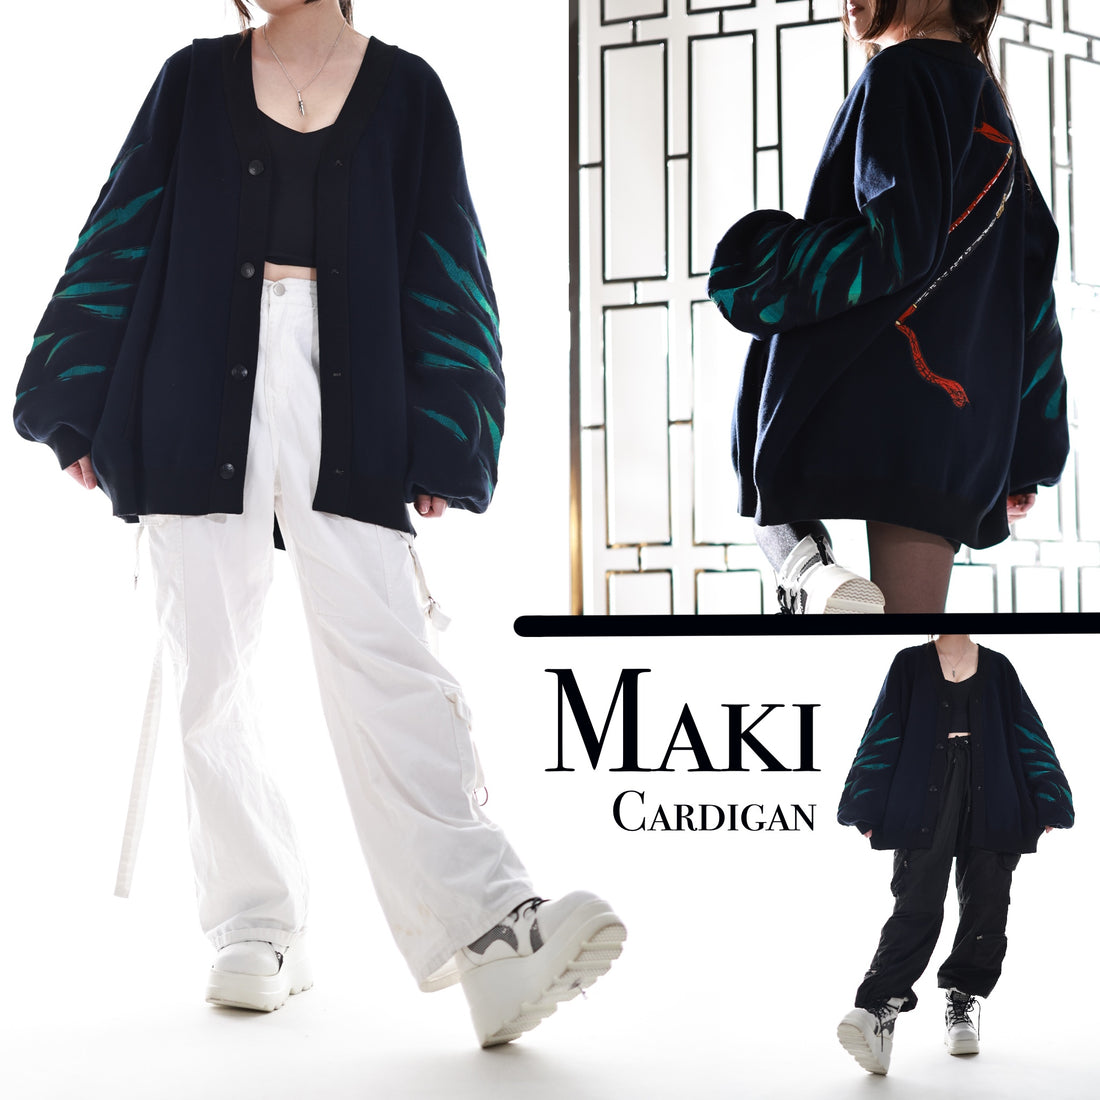 Maki Cardigan Preorder